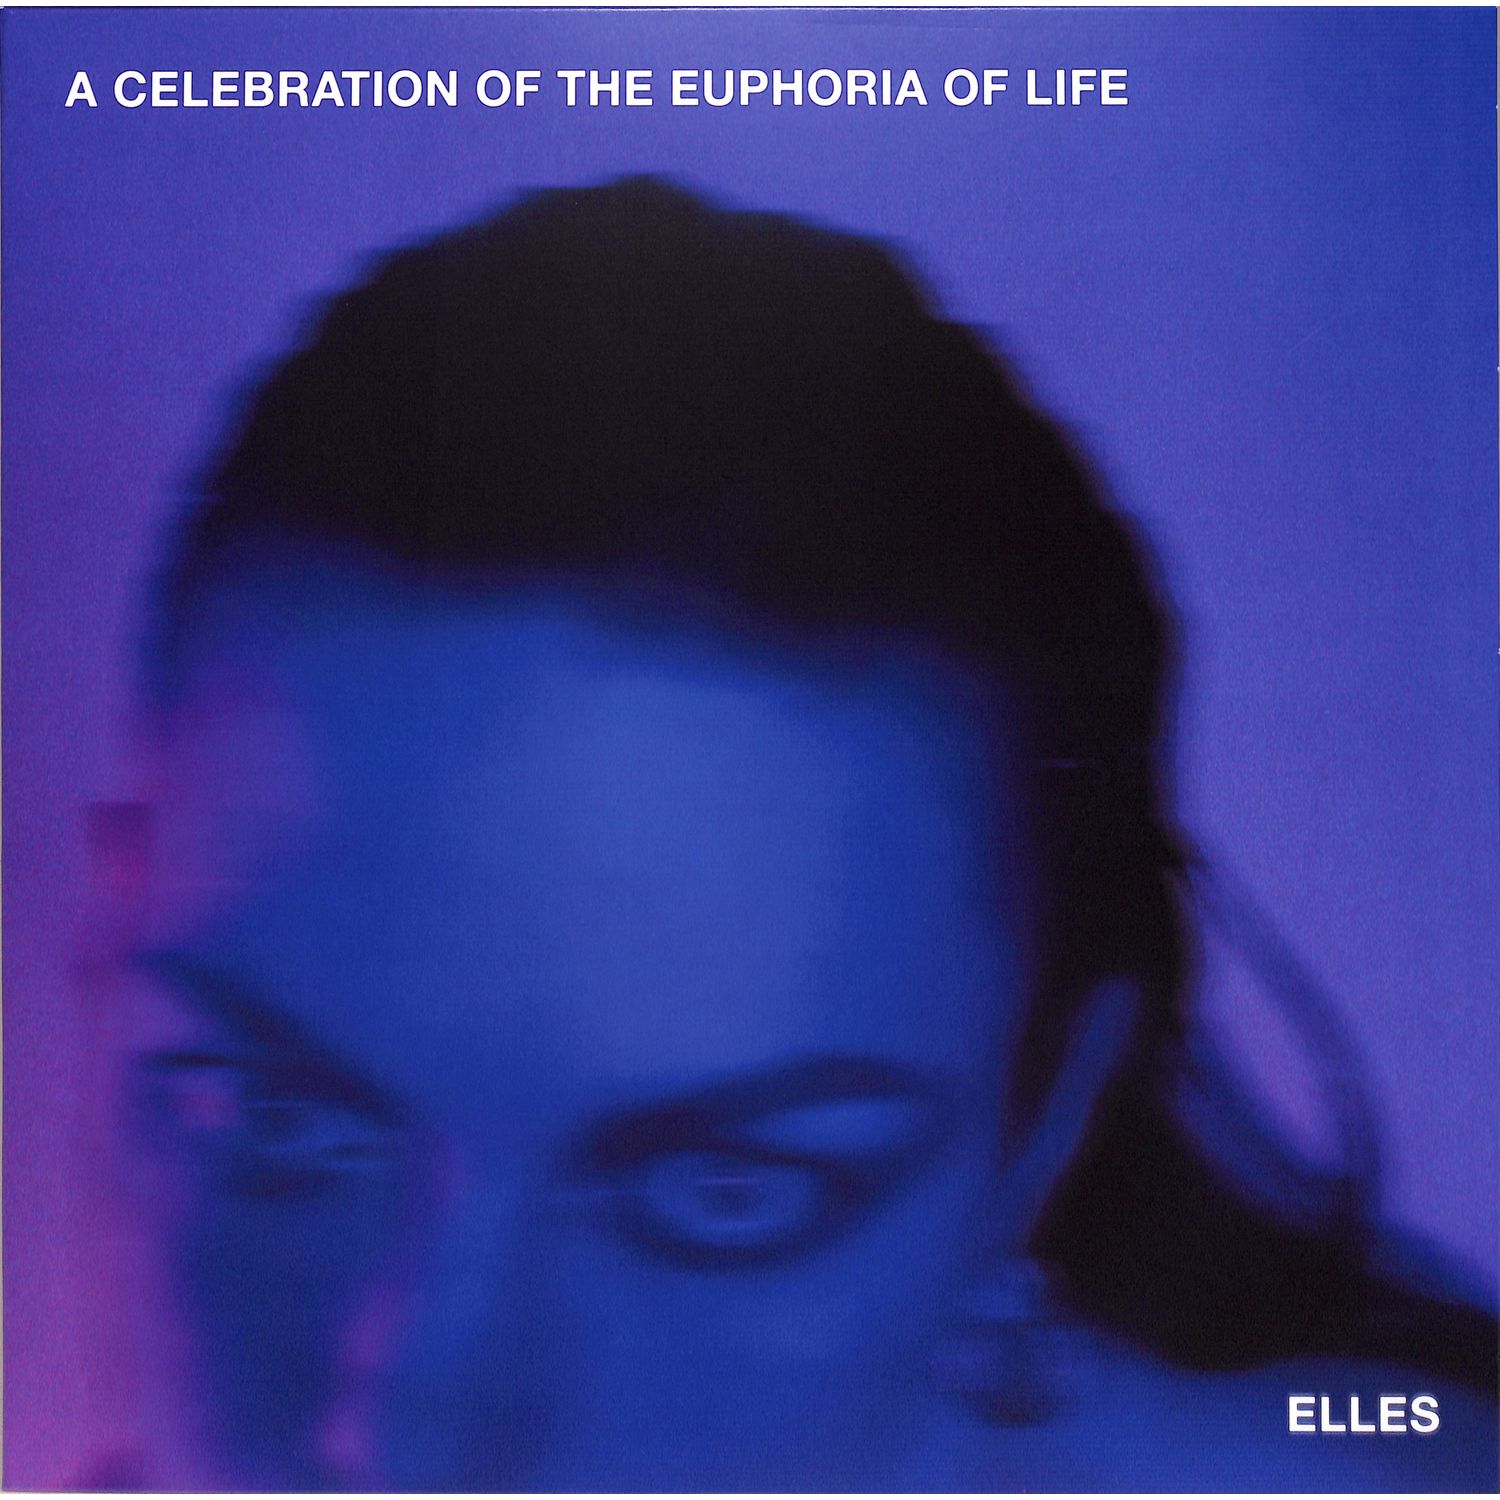 Elles - A CELEBRATION OF THE EUPHORIA OF LIFE 